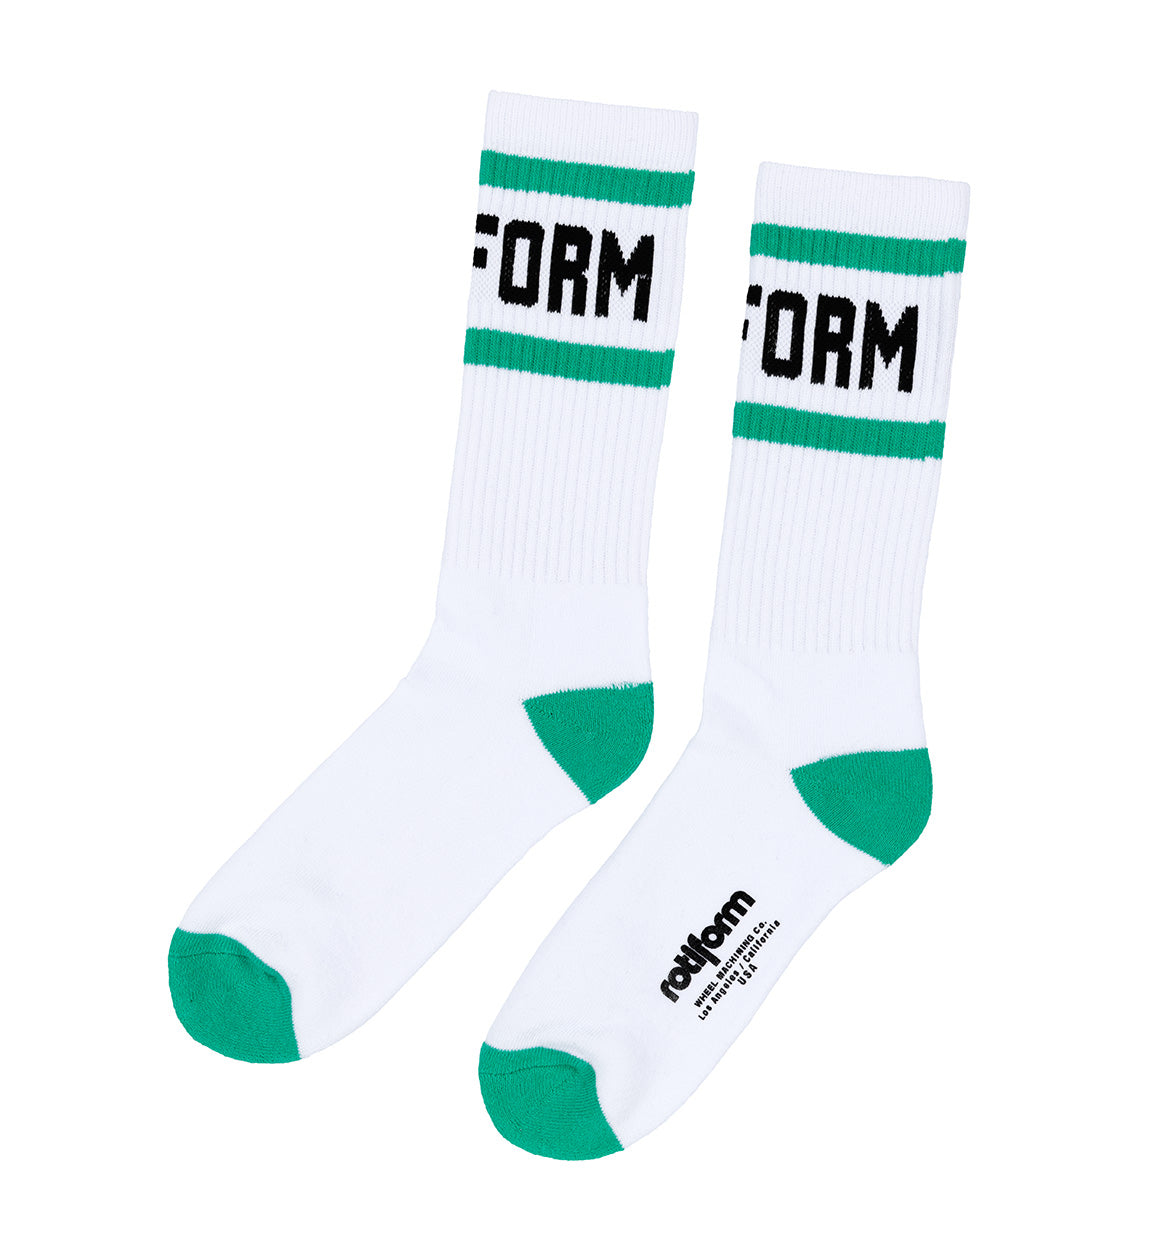 Rotiform Socks